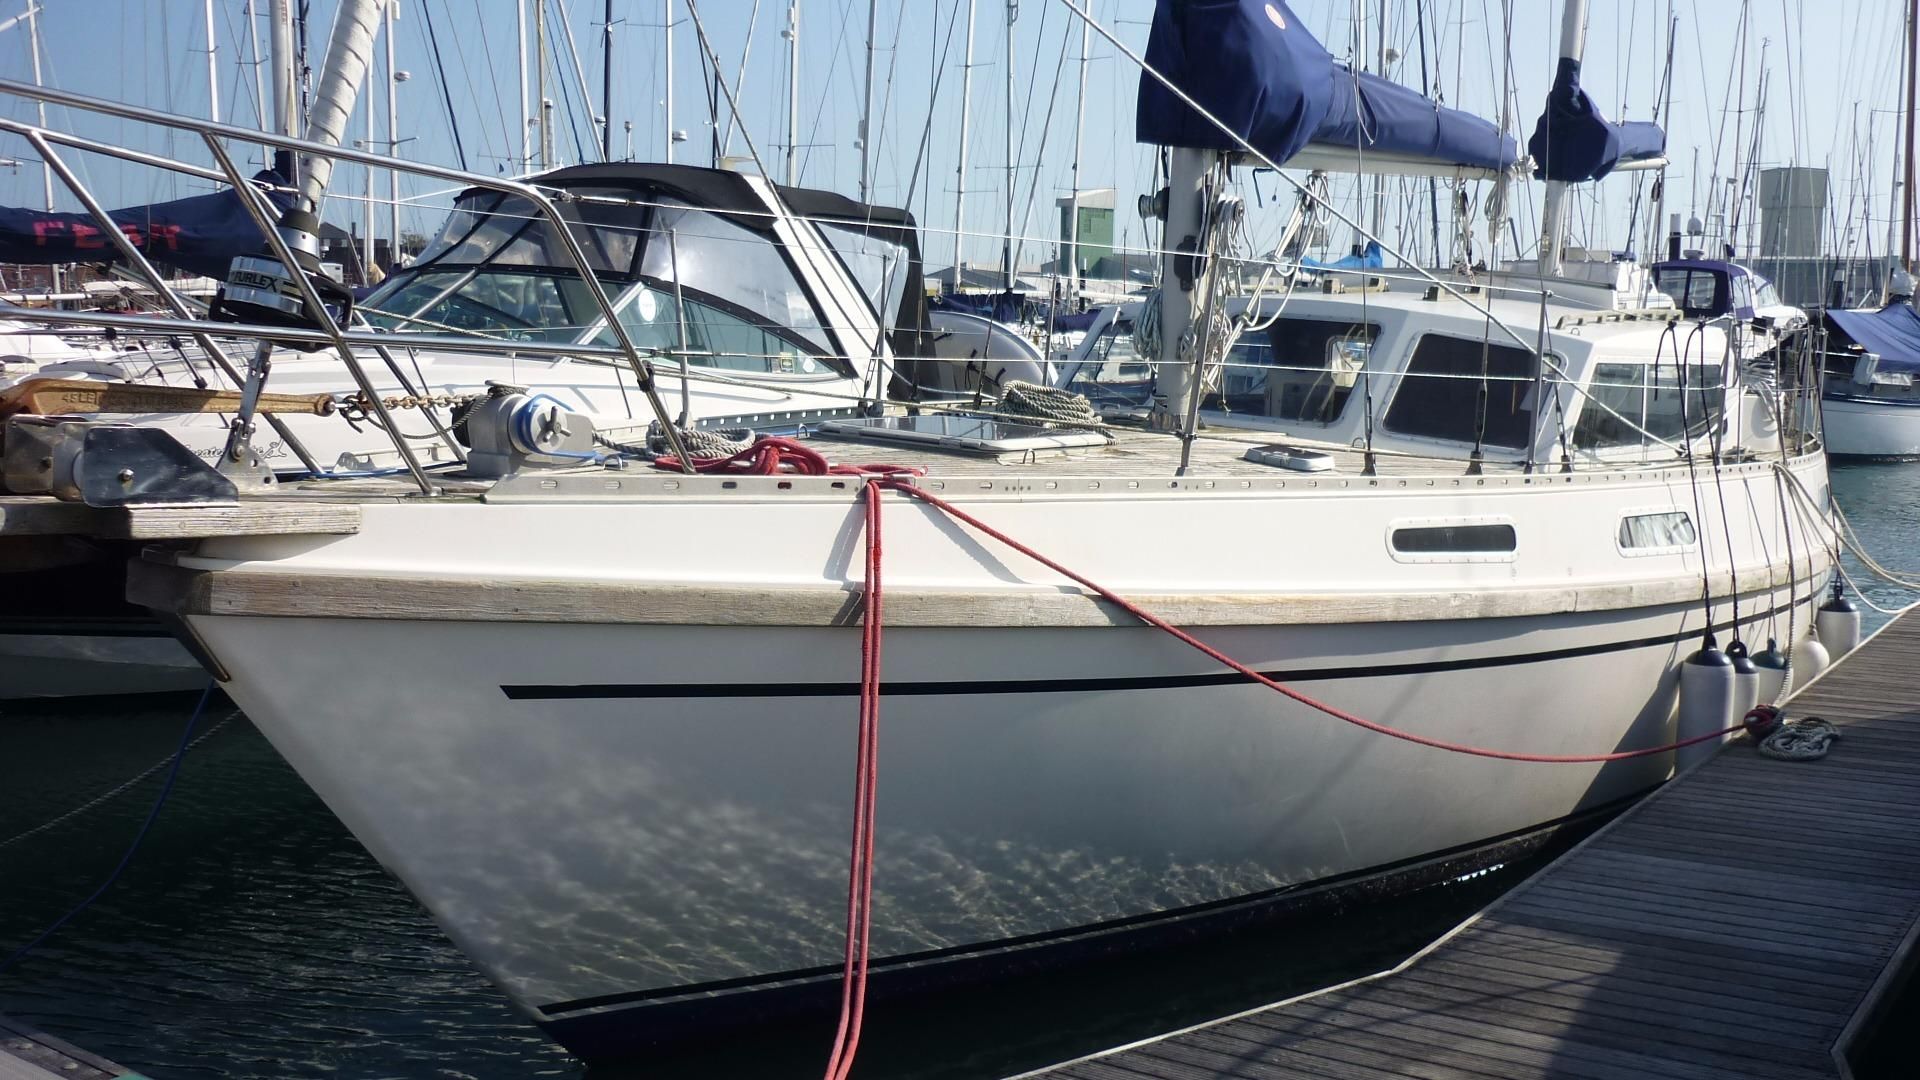 COLVIC VICTOR 40 sailing yacht for sale | De Valk Yacht broker